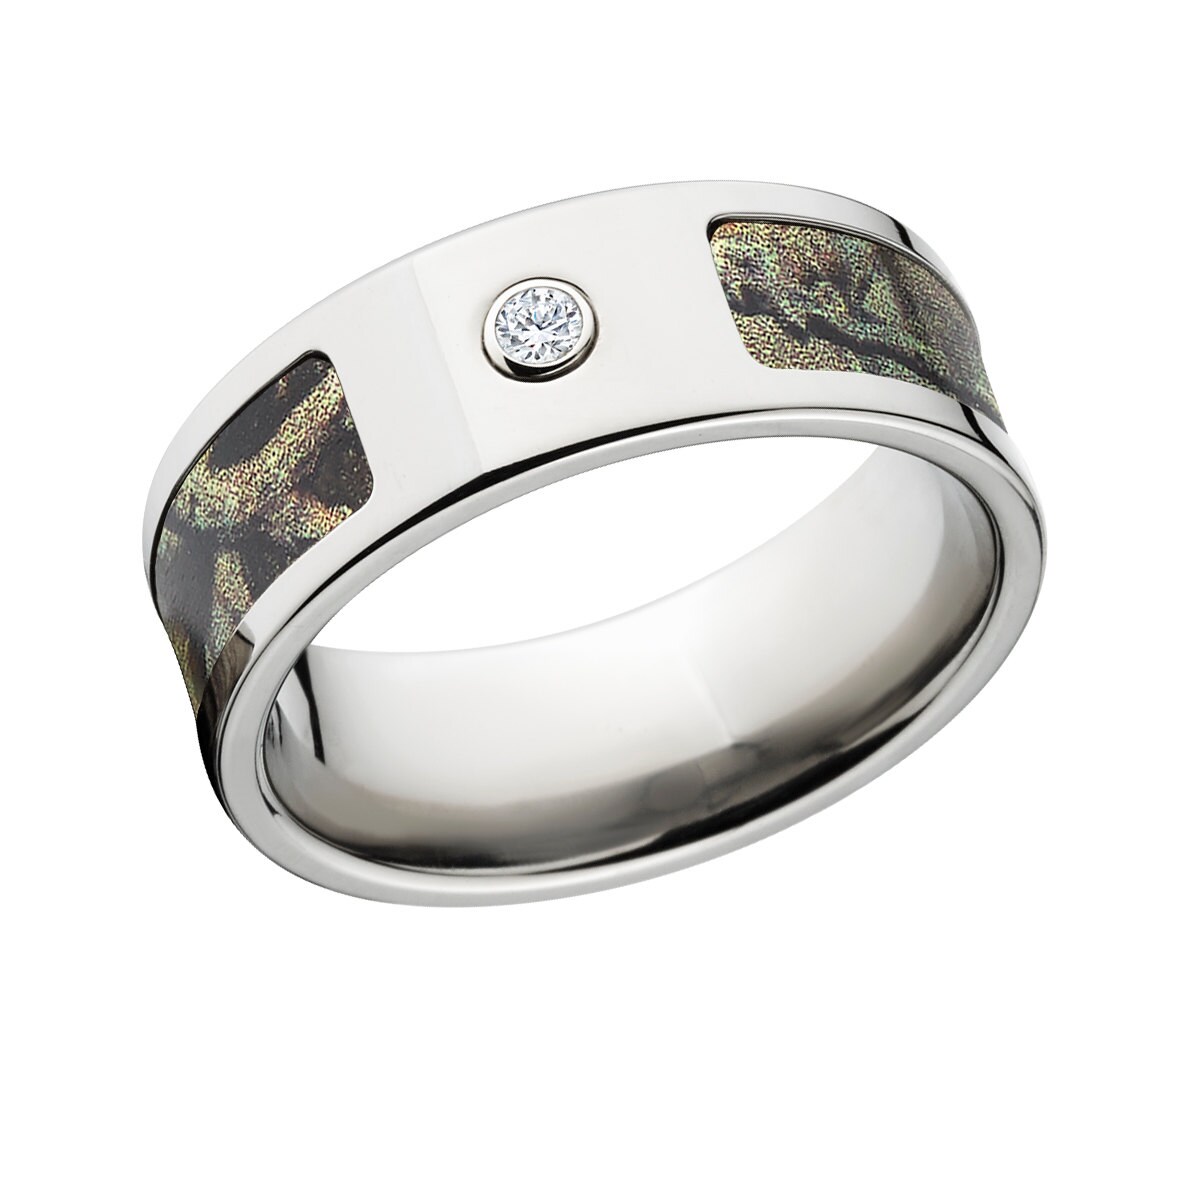 Buy NEW 8MM Flat Branded Mossy Oak Titanium Ring, Duck Pattern Online in  India - Etsy